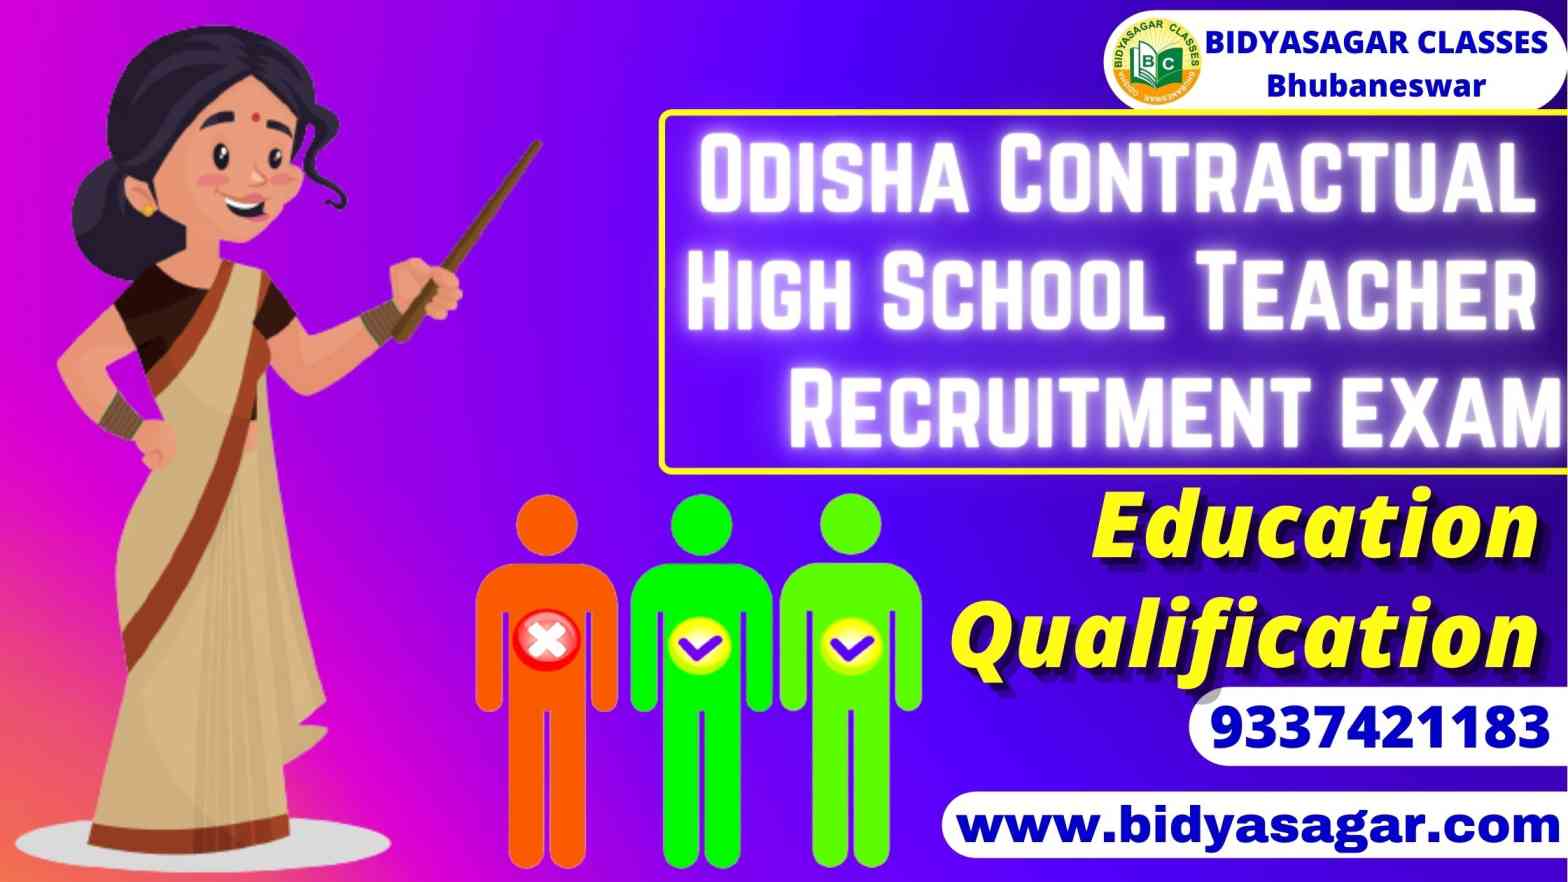 Odisha Contractual High School Teacher Recruitment Exam 2022 Education Qualification